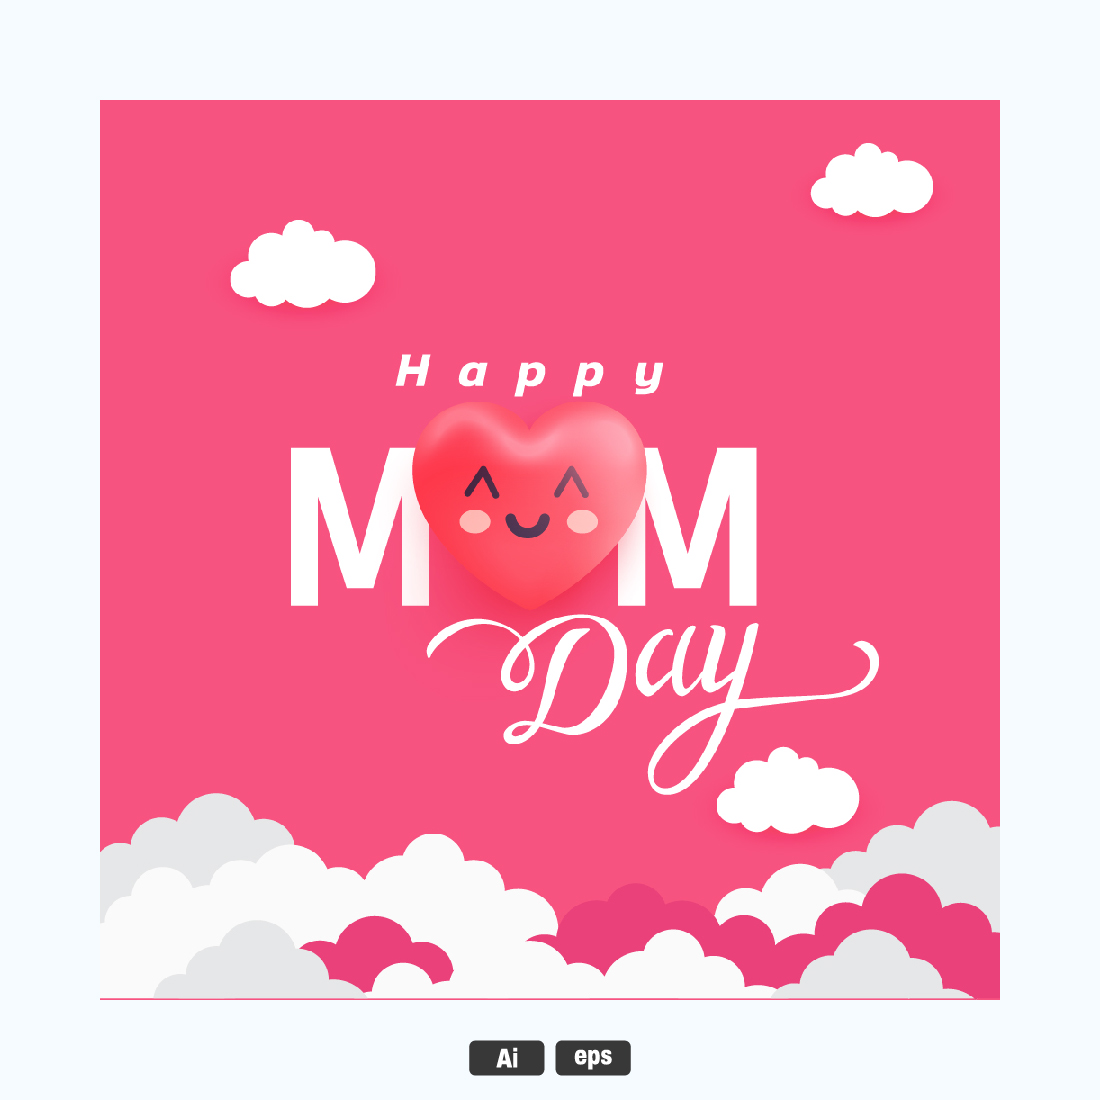 Mother's Days social media banner cover image.